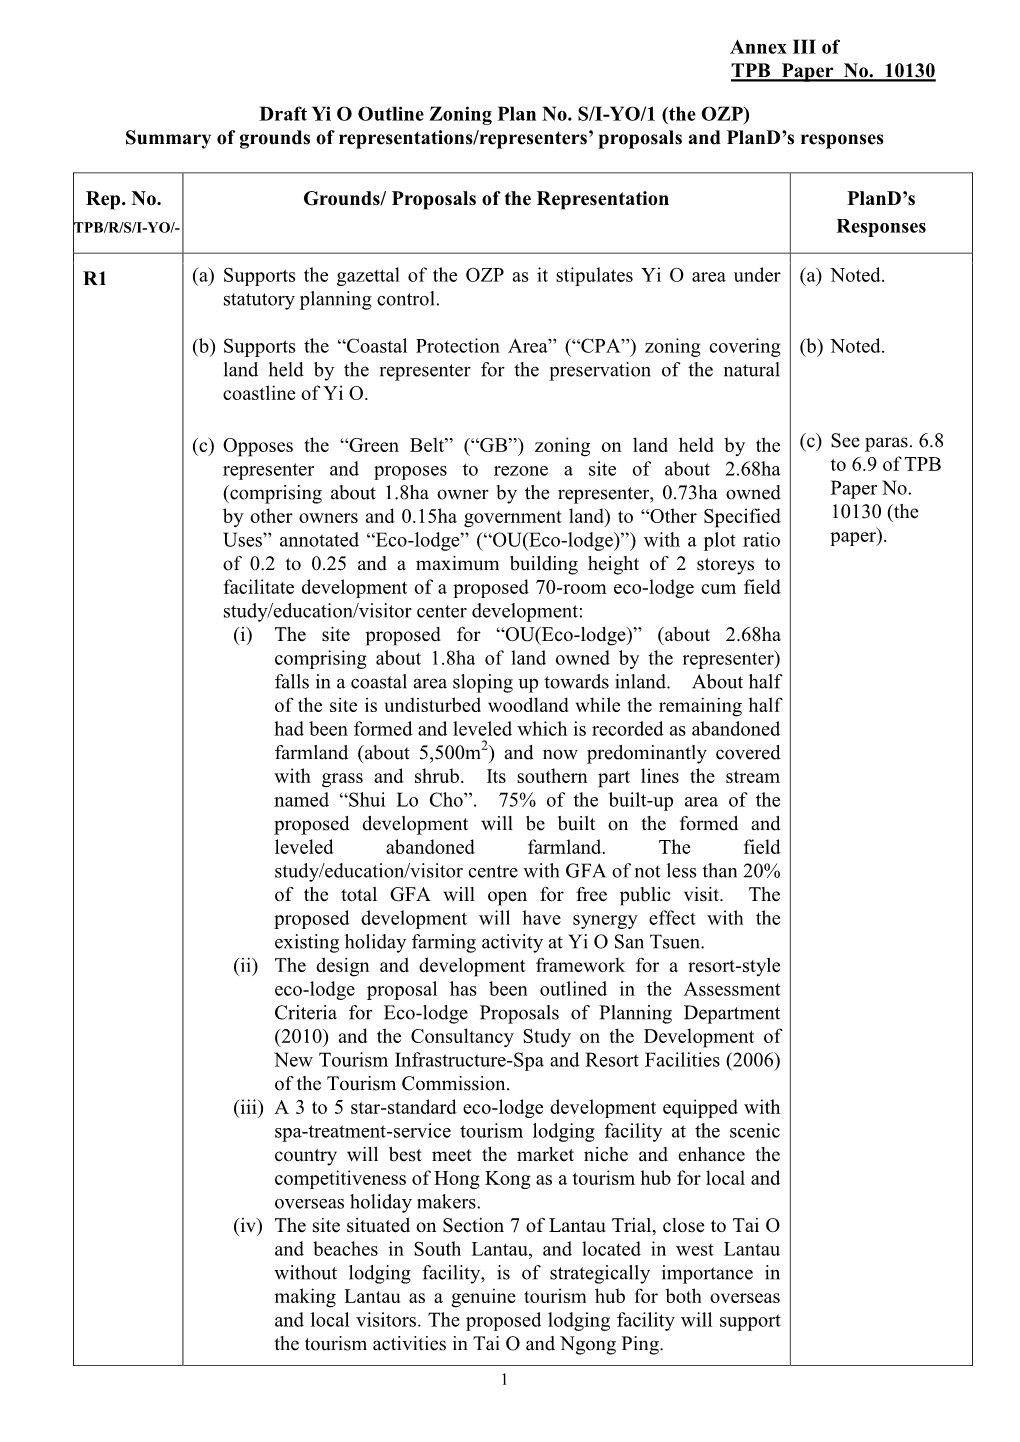 Annex III of TPB Paper No. 10130 Draft Yi O Outline Zoning Plan No. S/I-YO/1